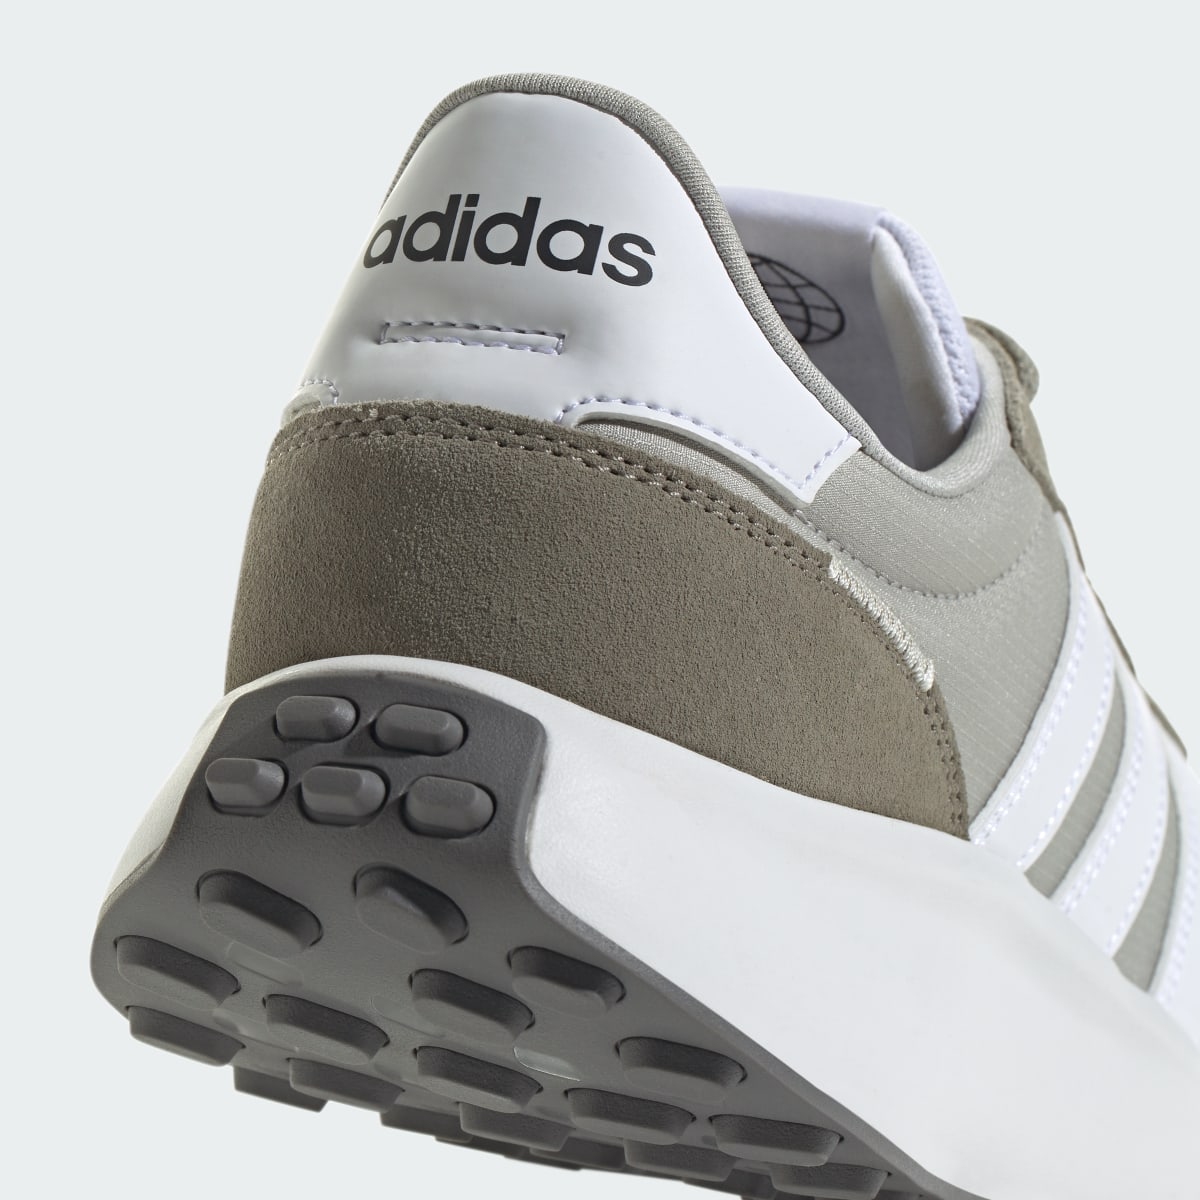 Adidas Run 70s Lifestyle Running Shoes. 10